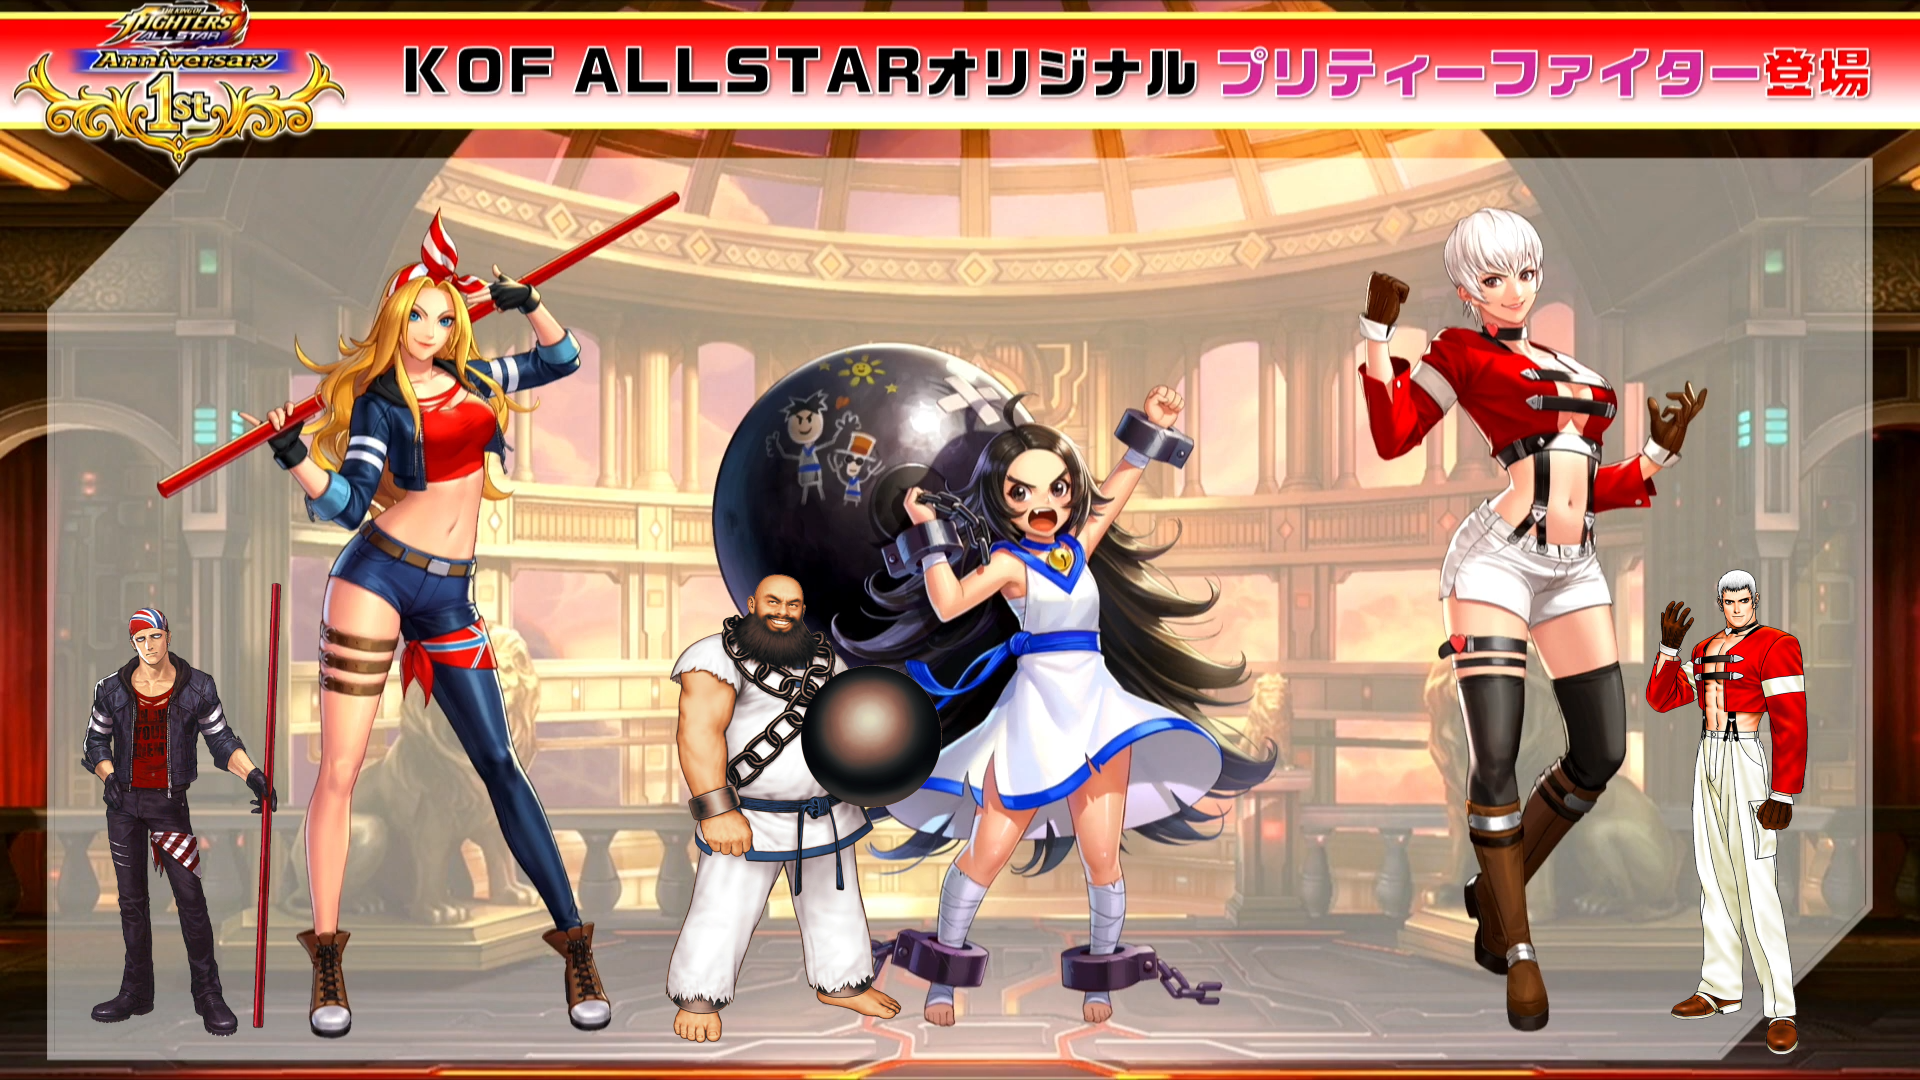 The King of Fighters Allstar Japan server 1st anniversary new female skins